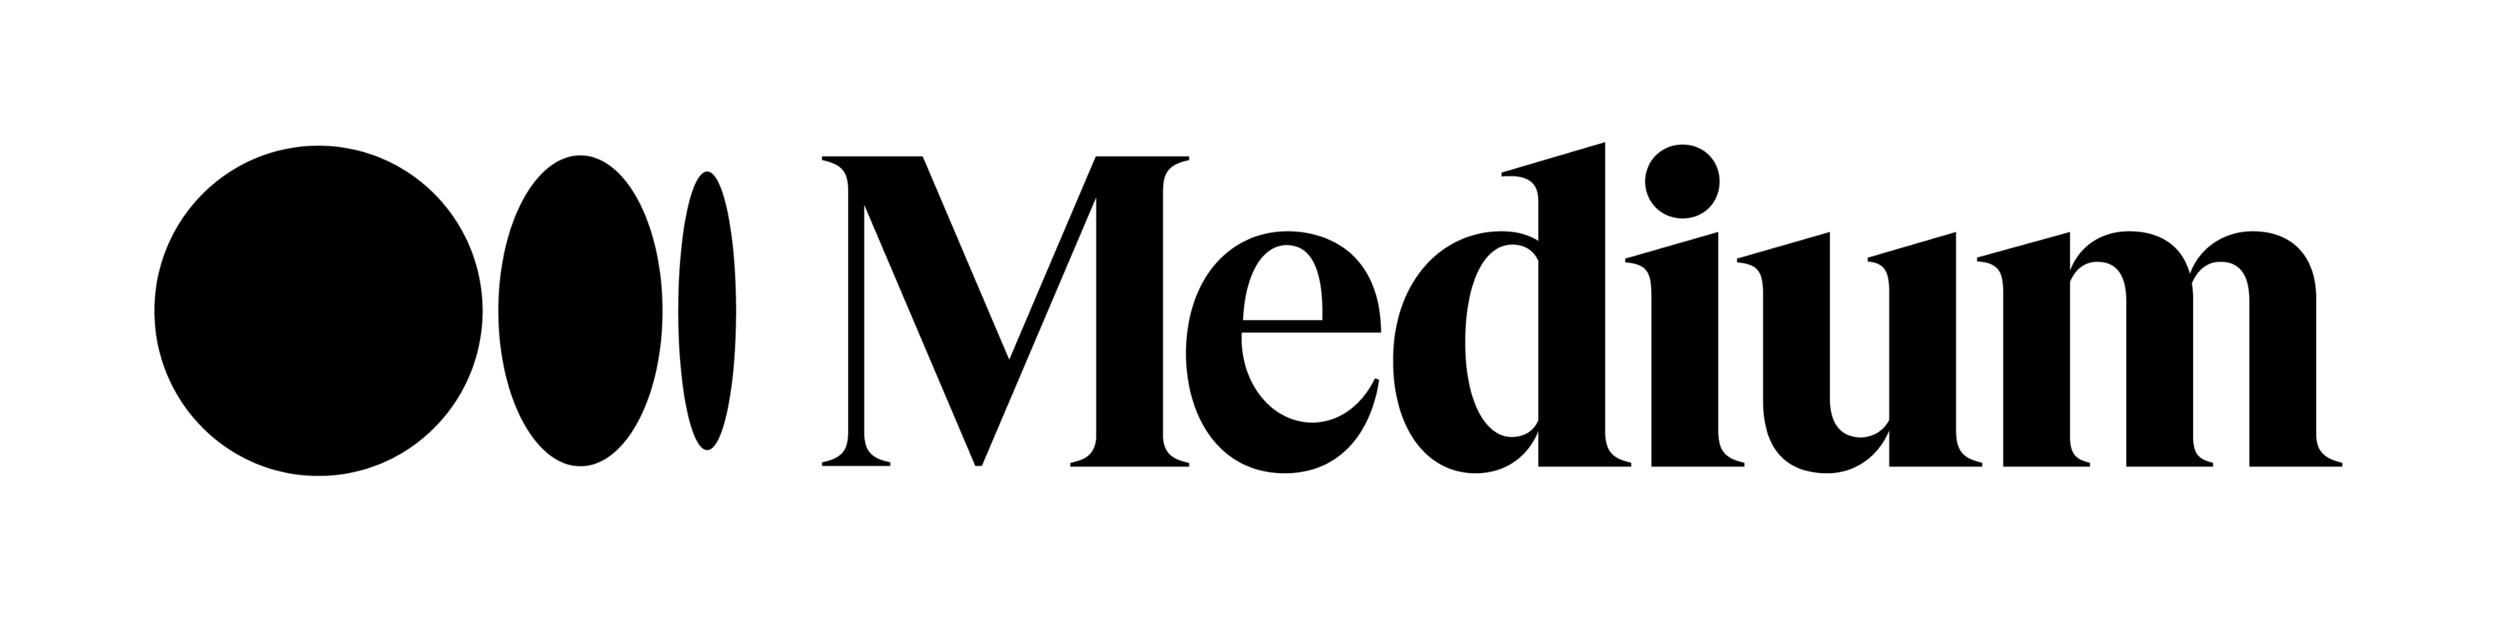 Medium Logo.png